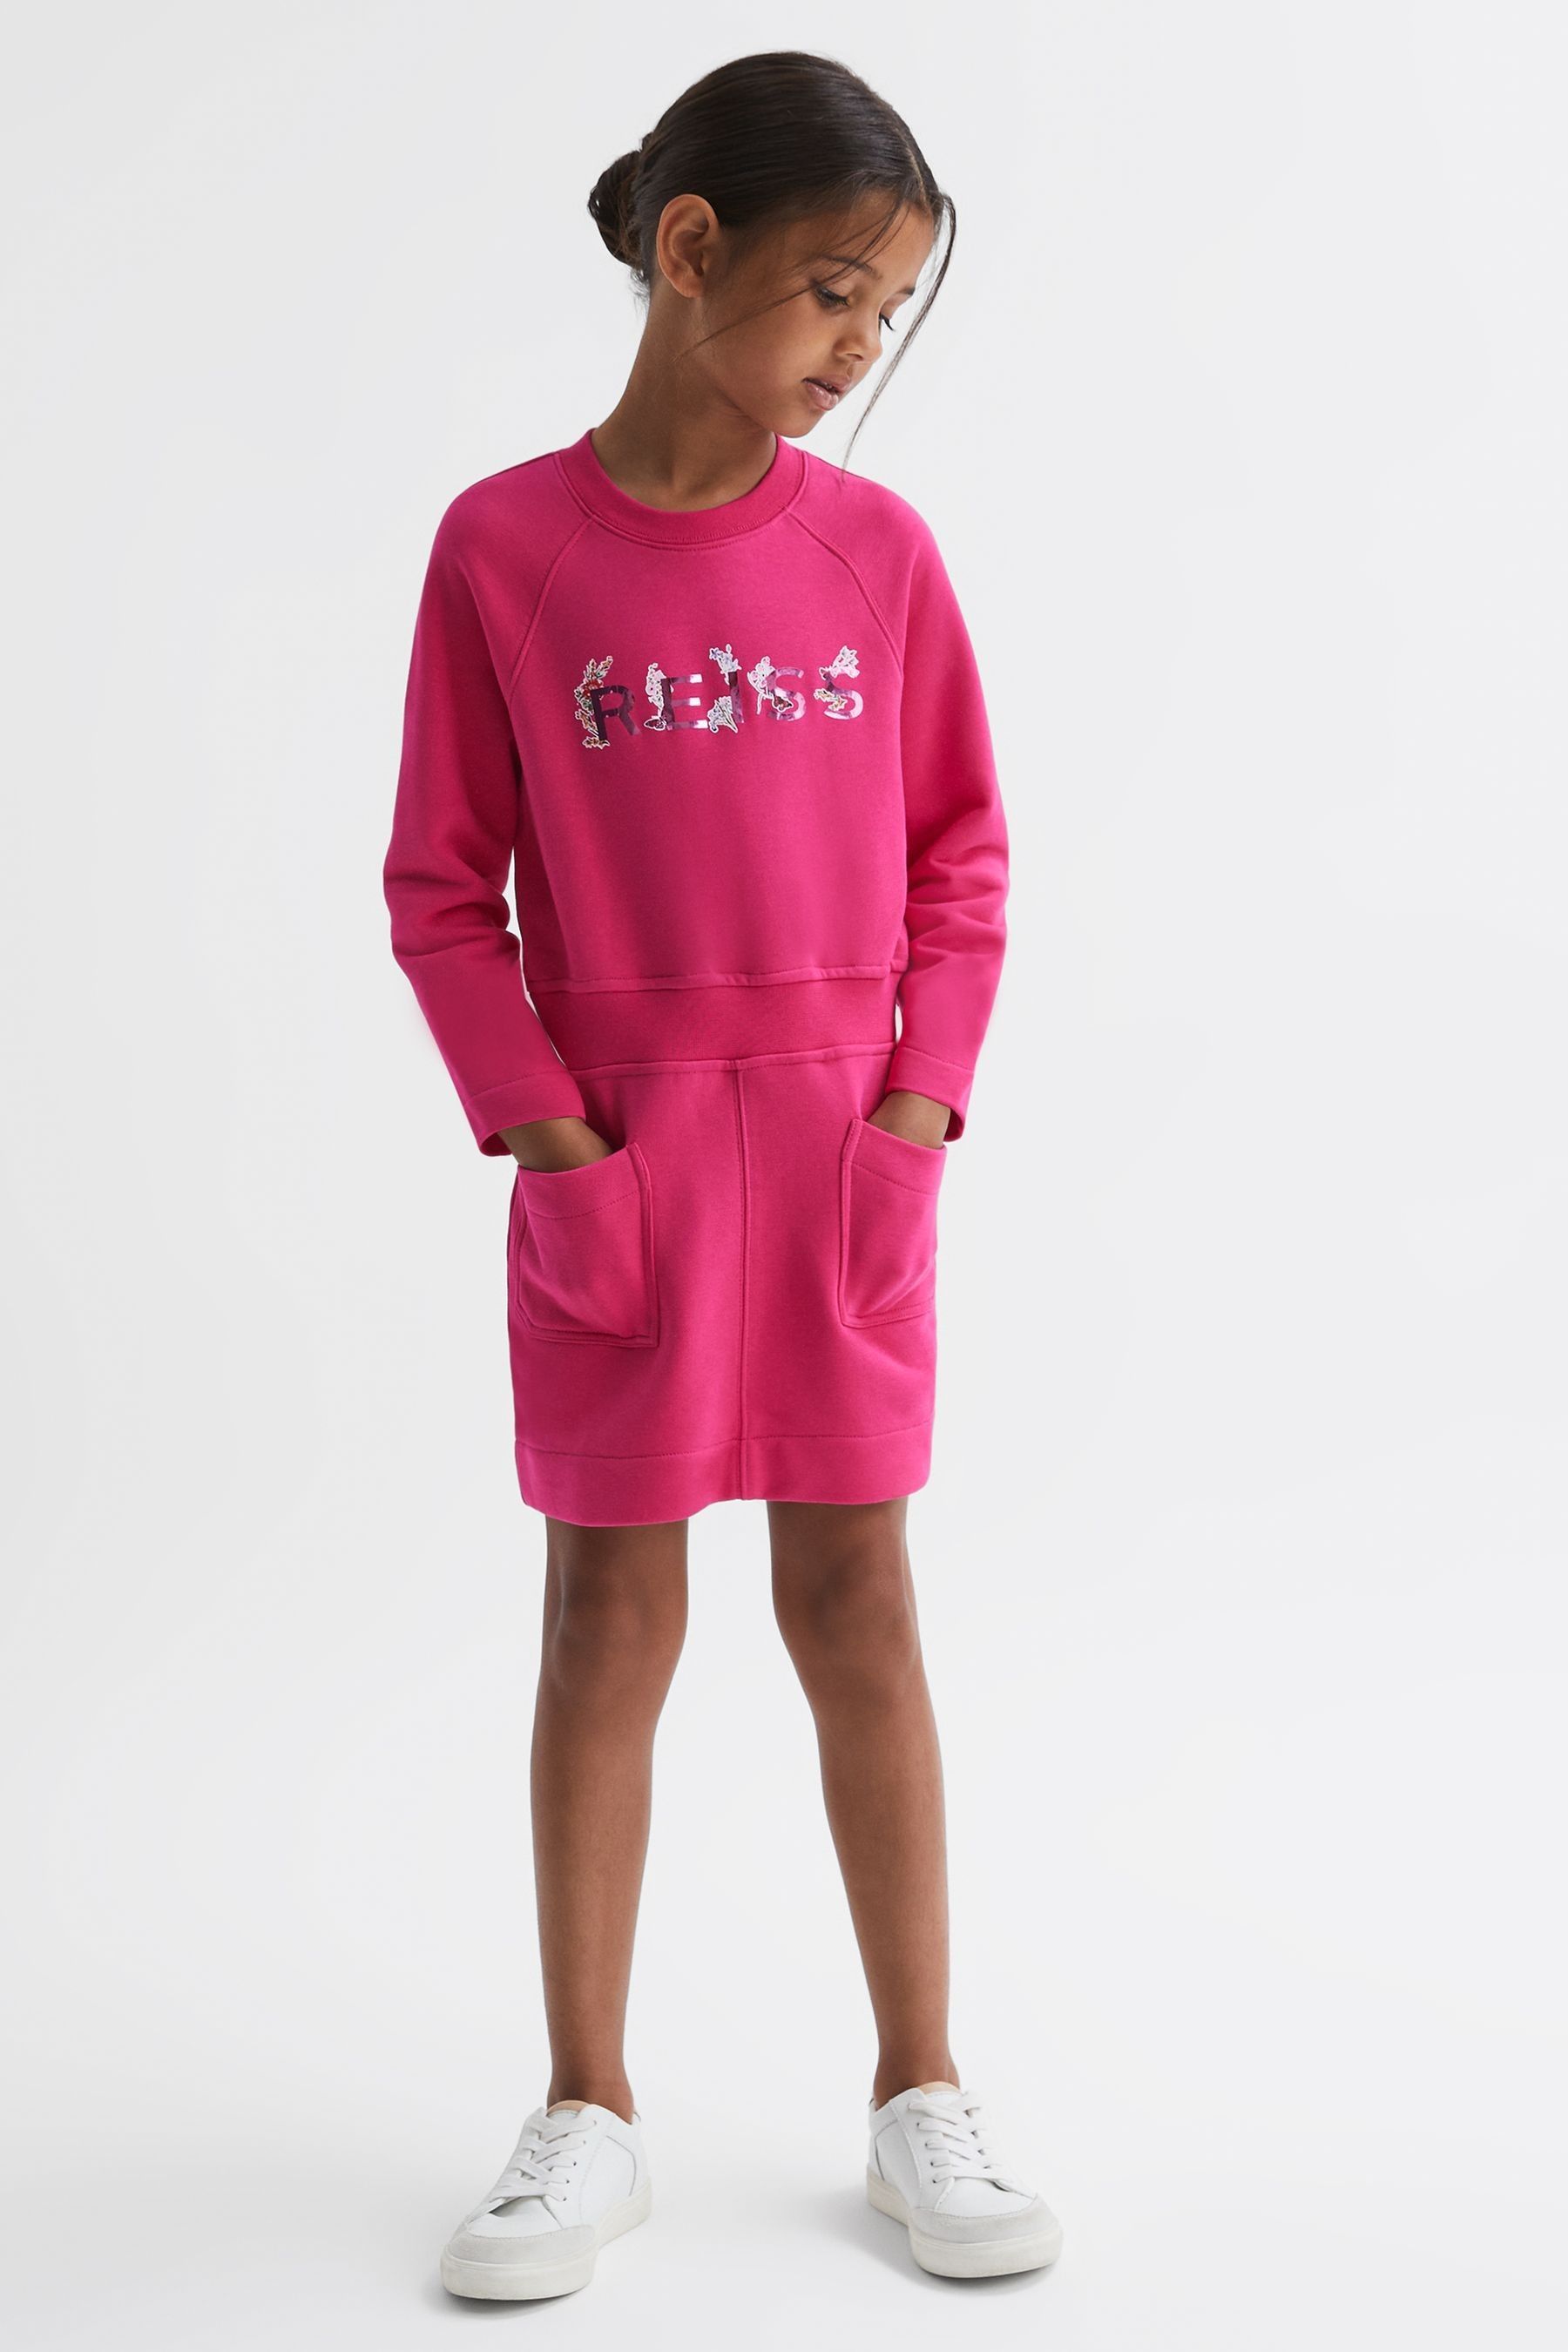 Reiss Kids' Janine - Pink Junior Sweatshirt Dress, Age 4-5 Years